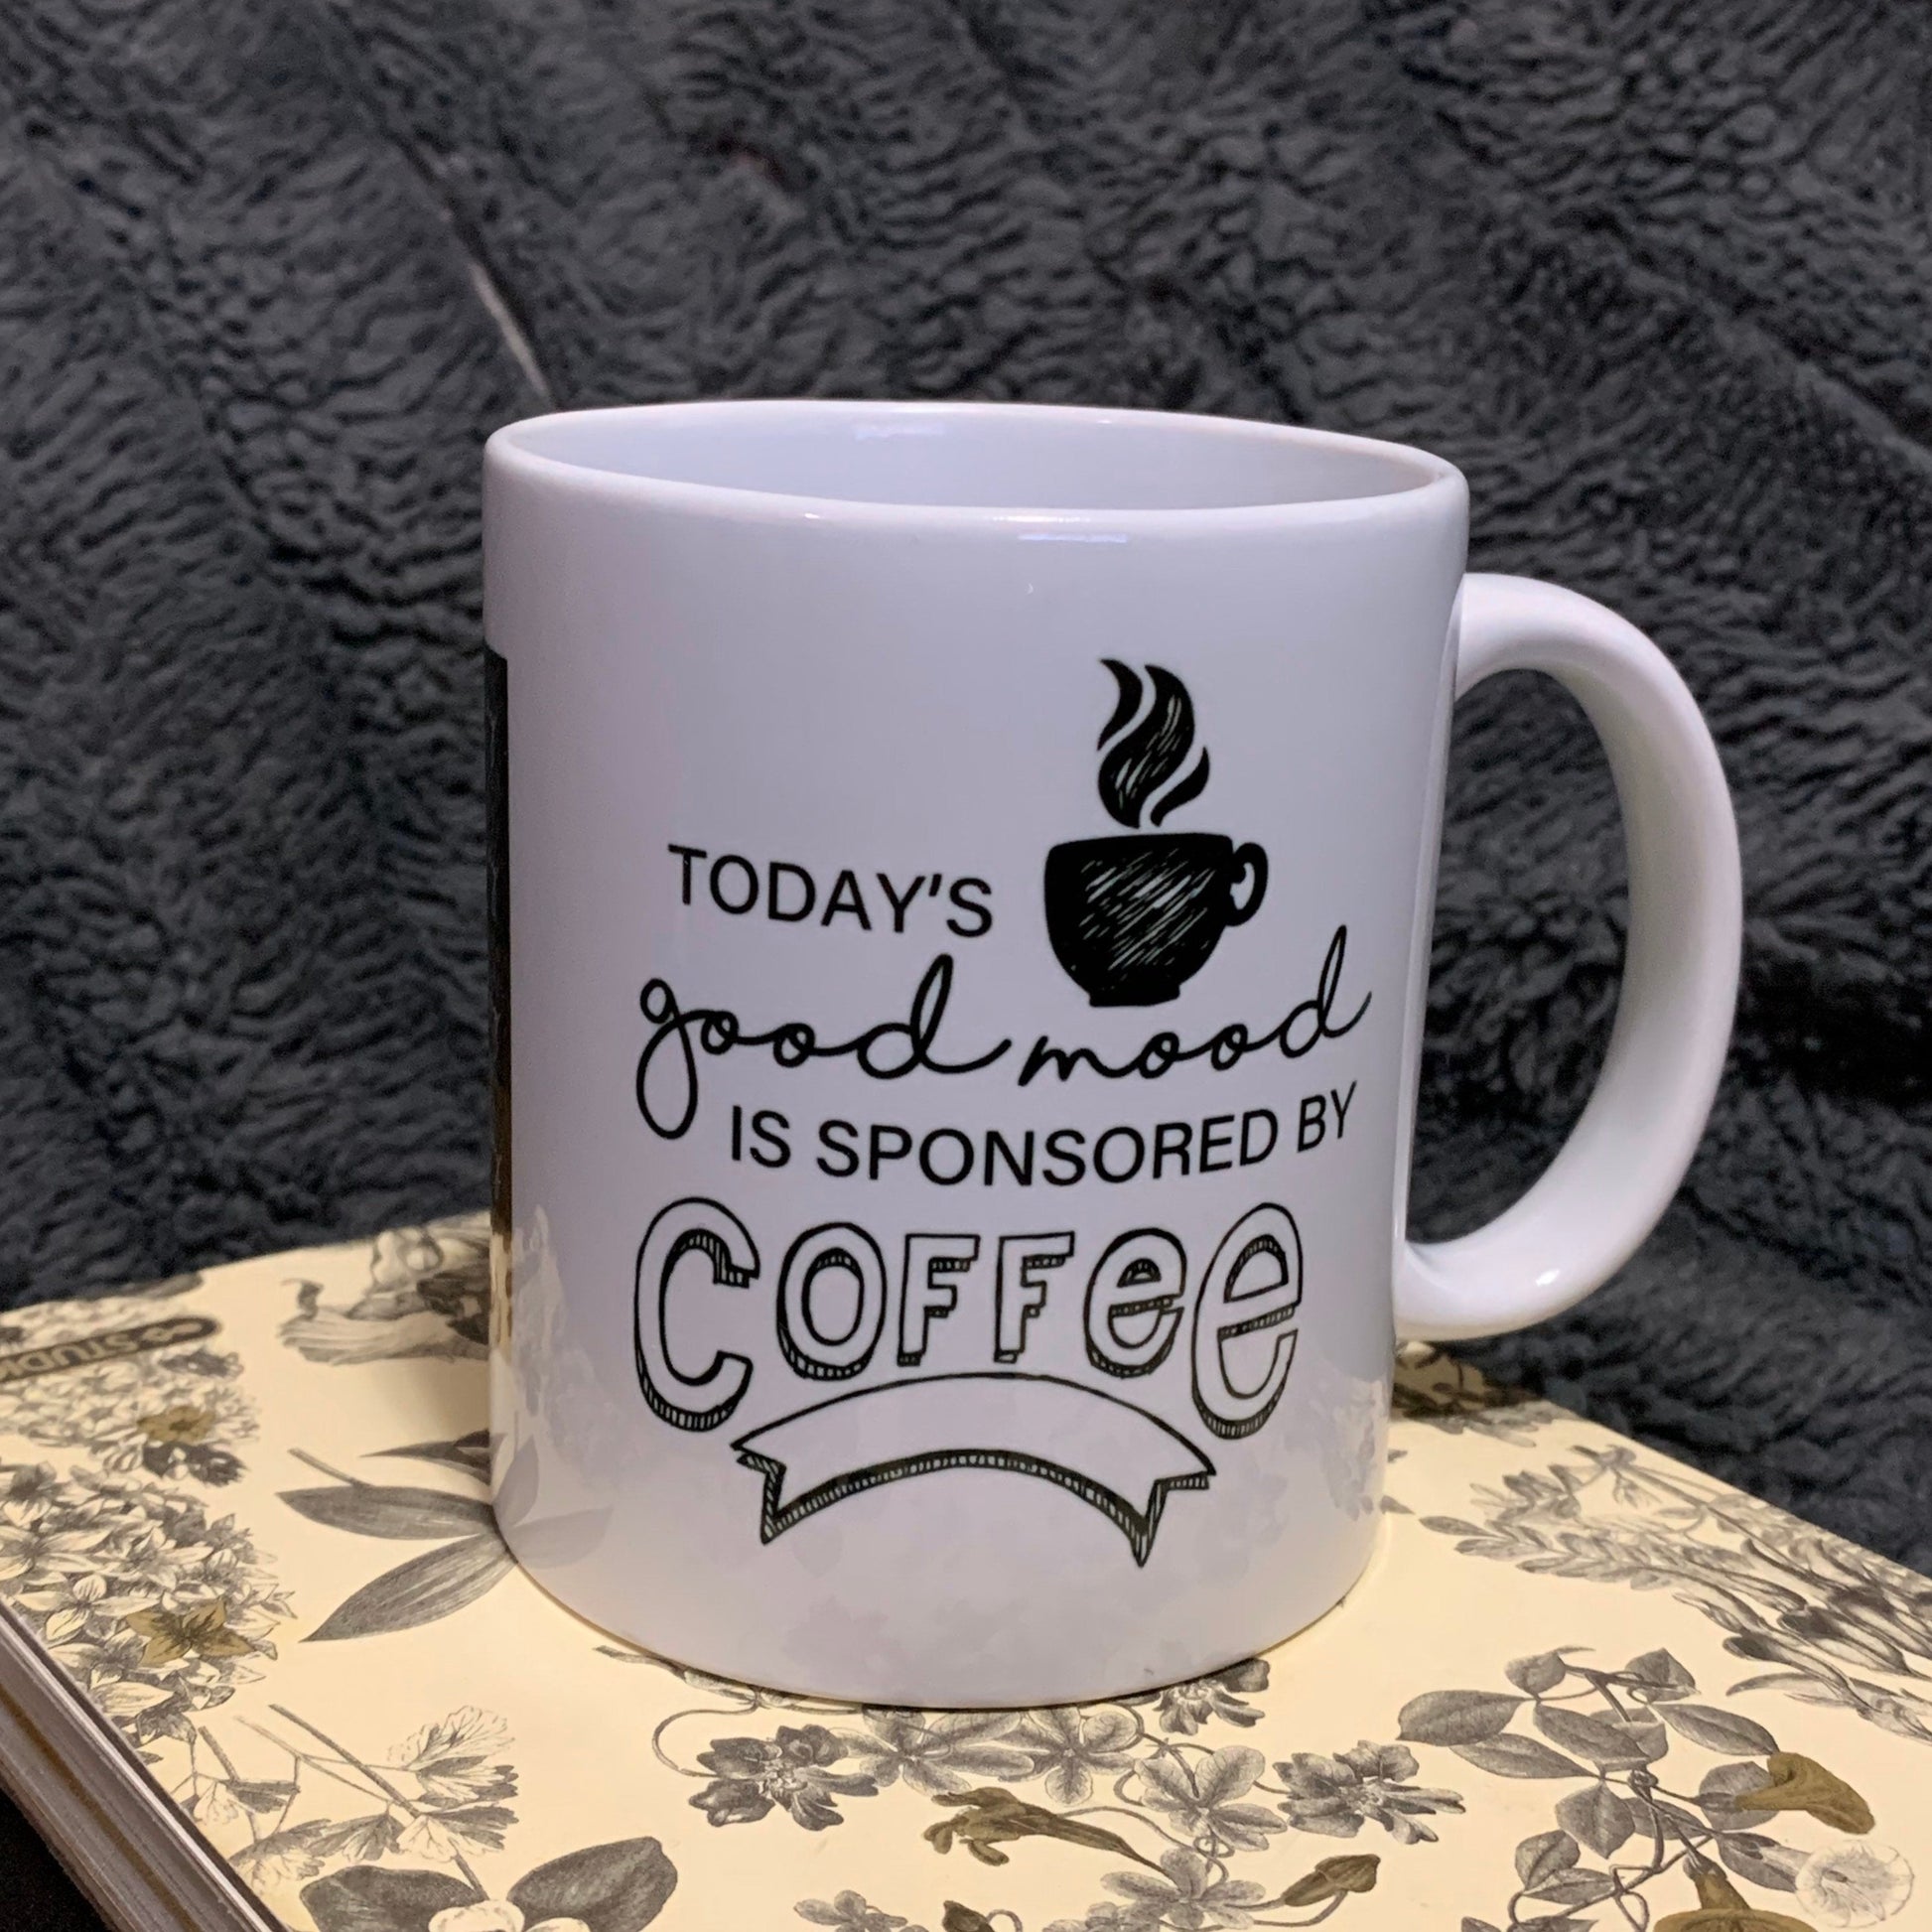 Coffee Lover Hostess Gift Home Decor - Motivational Mug - 11 oz. - Busybee Creates